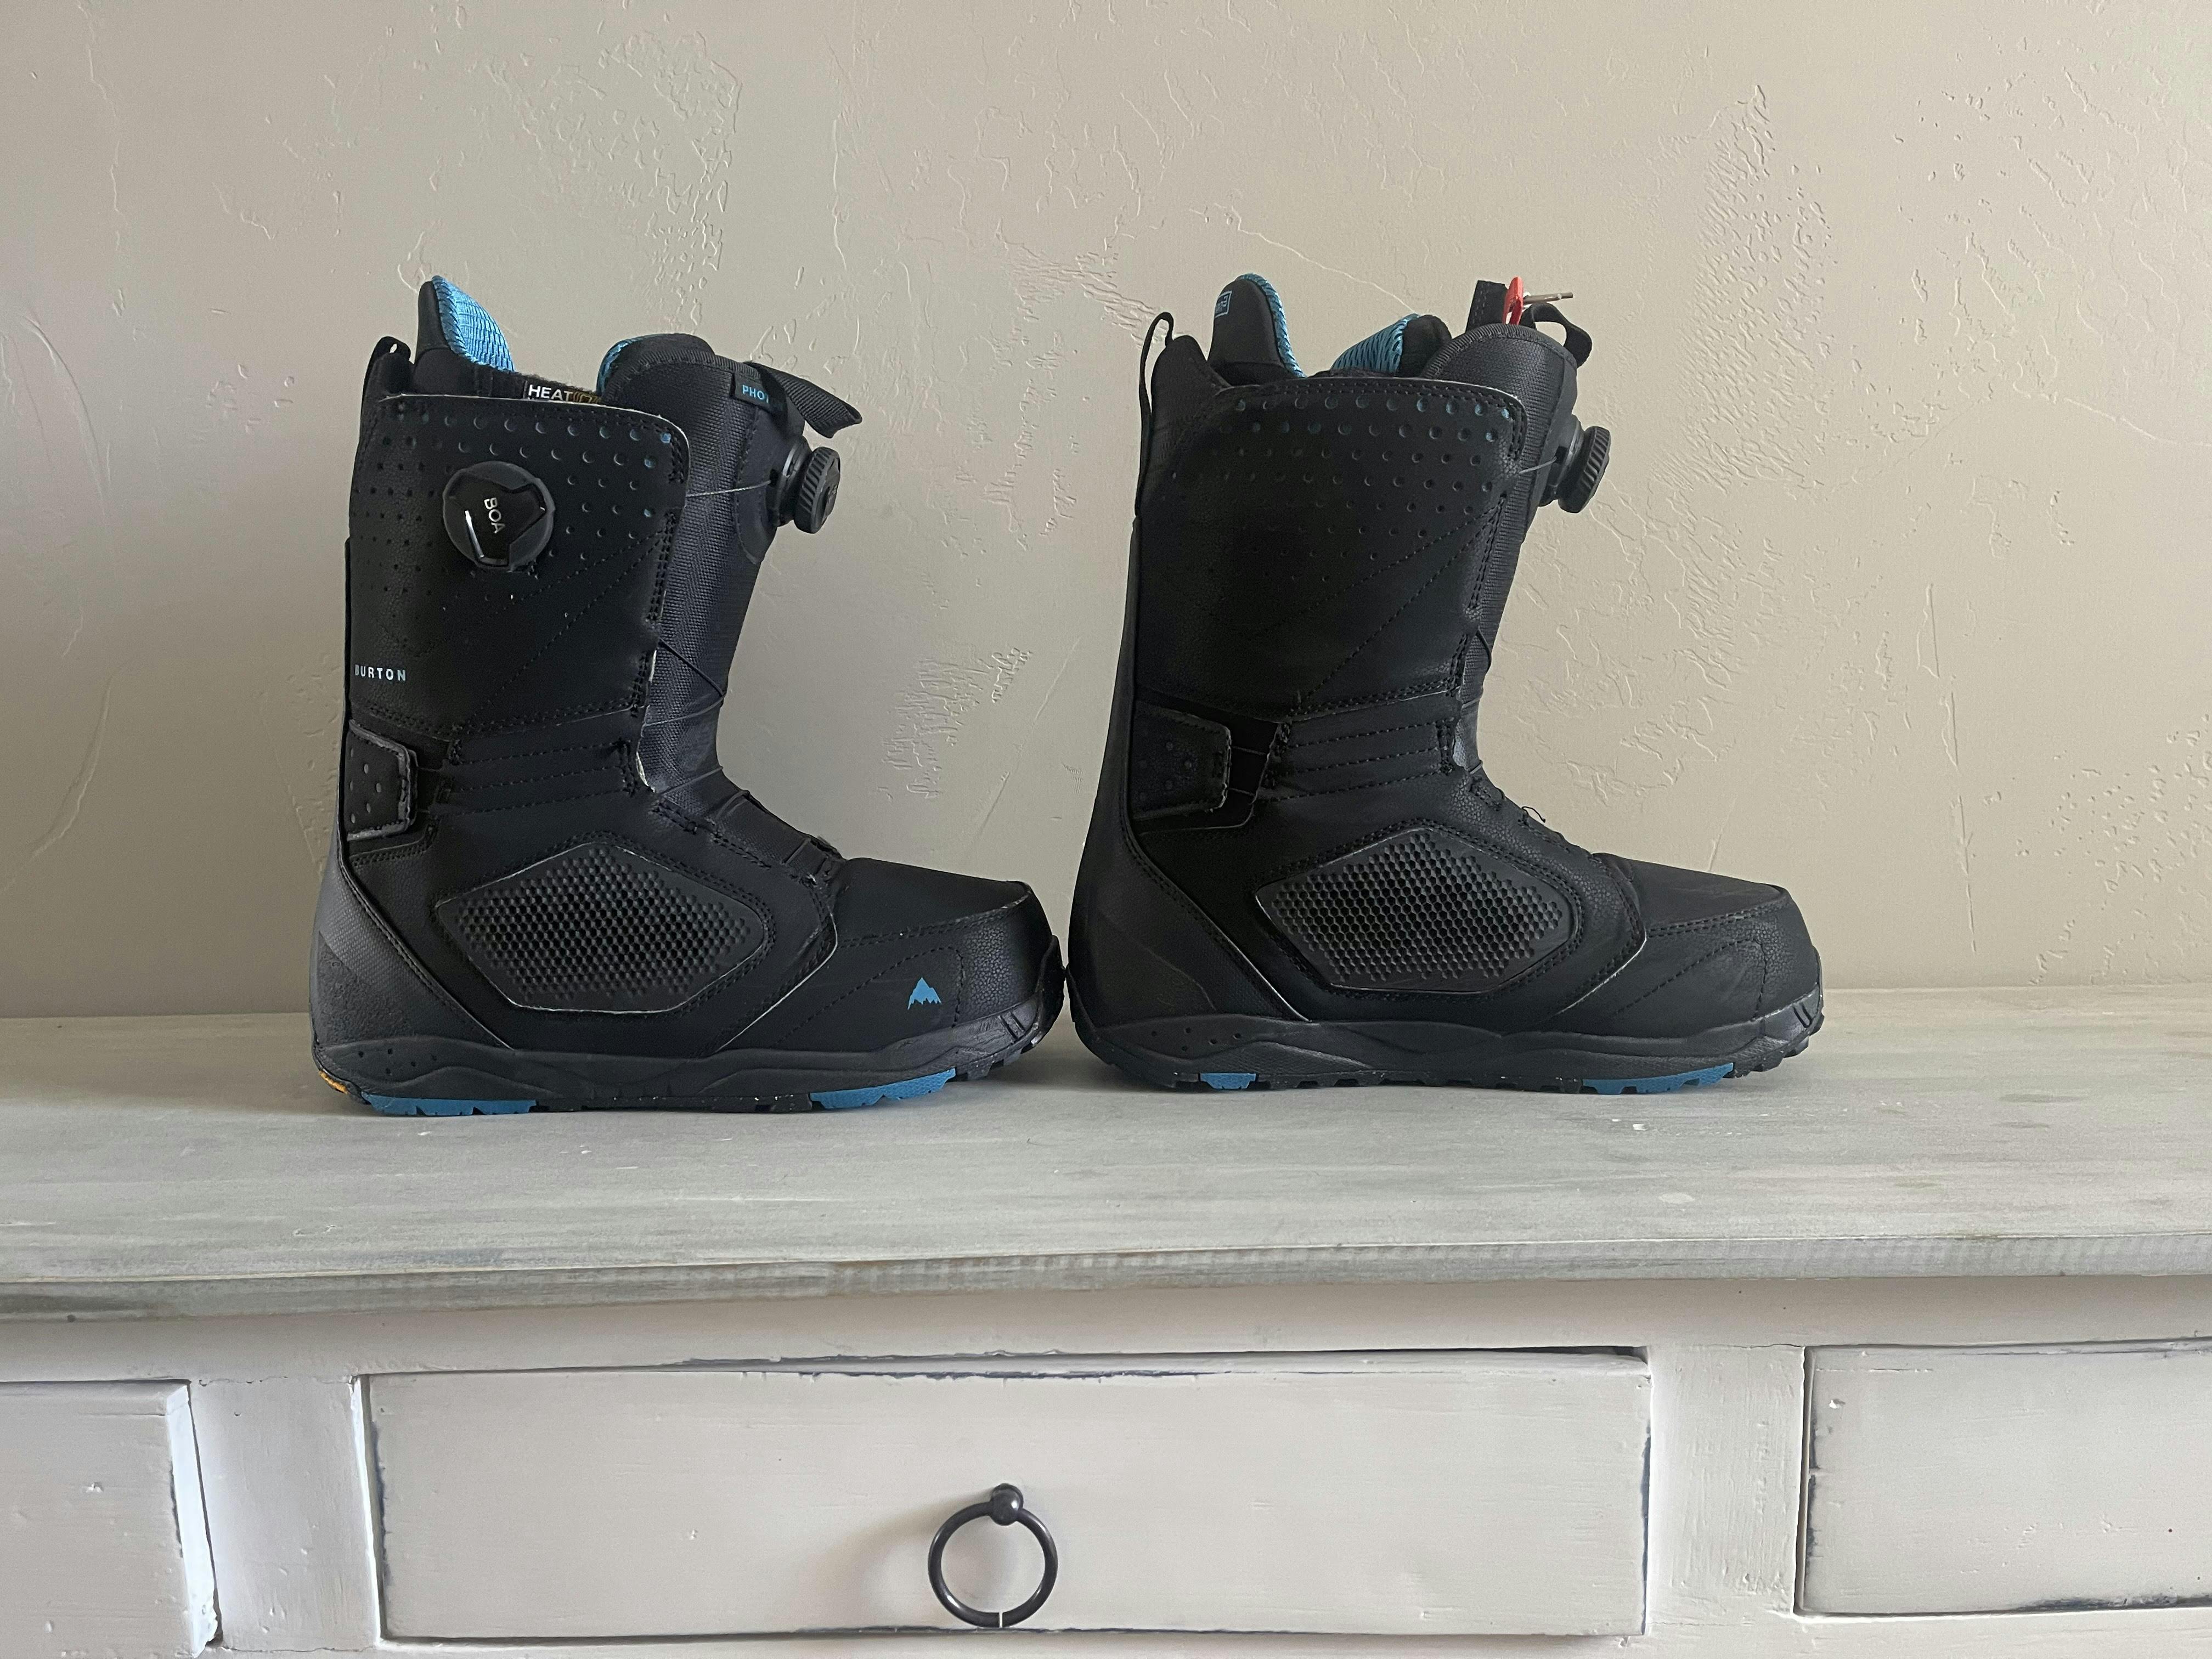 The Burton Photon BOA Snowboard Boots.